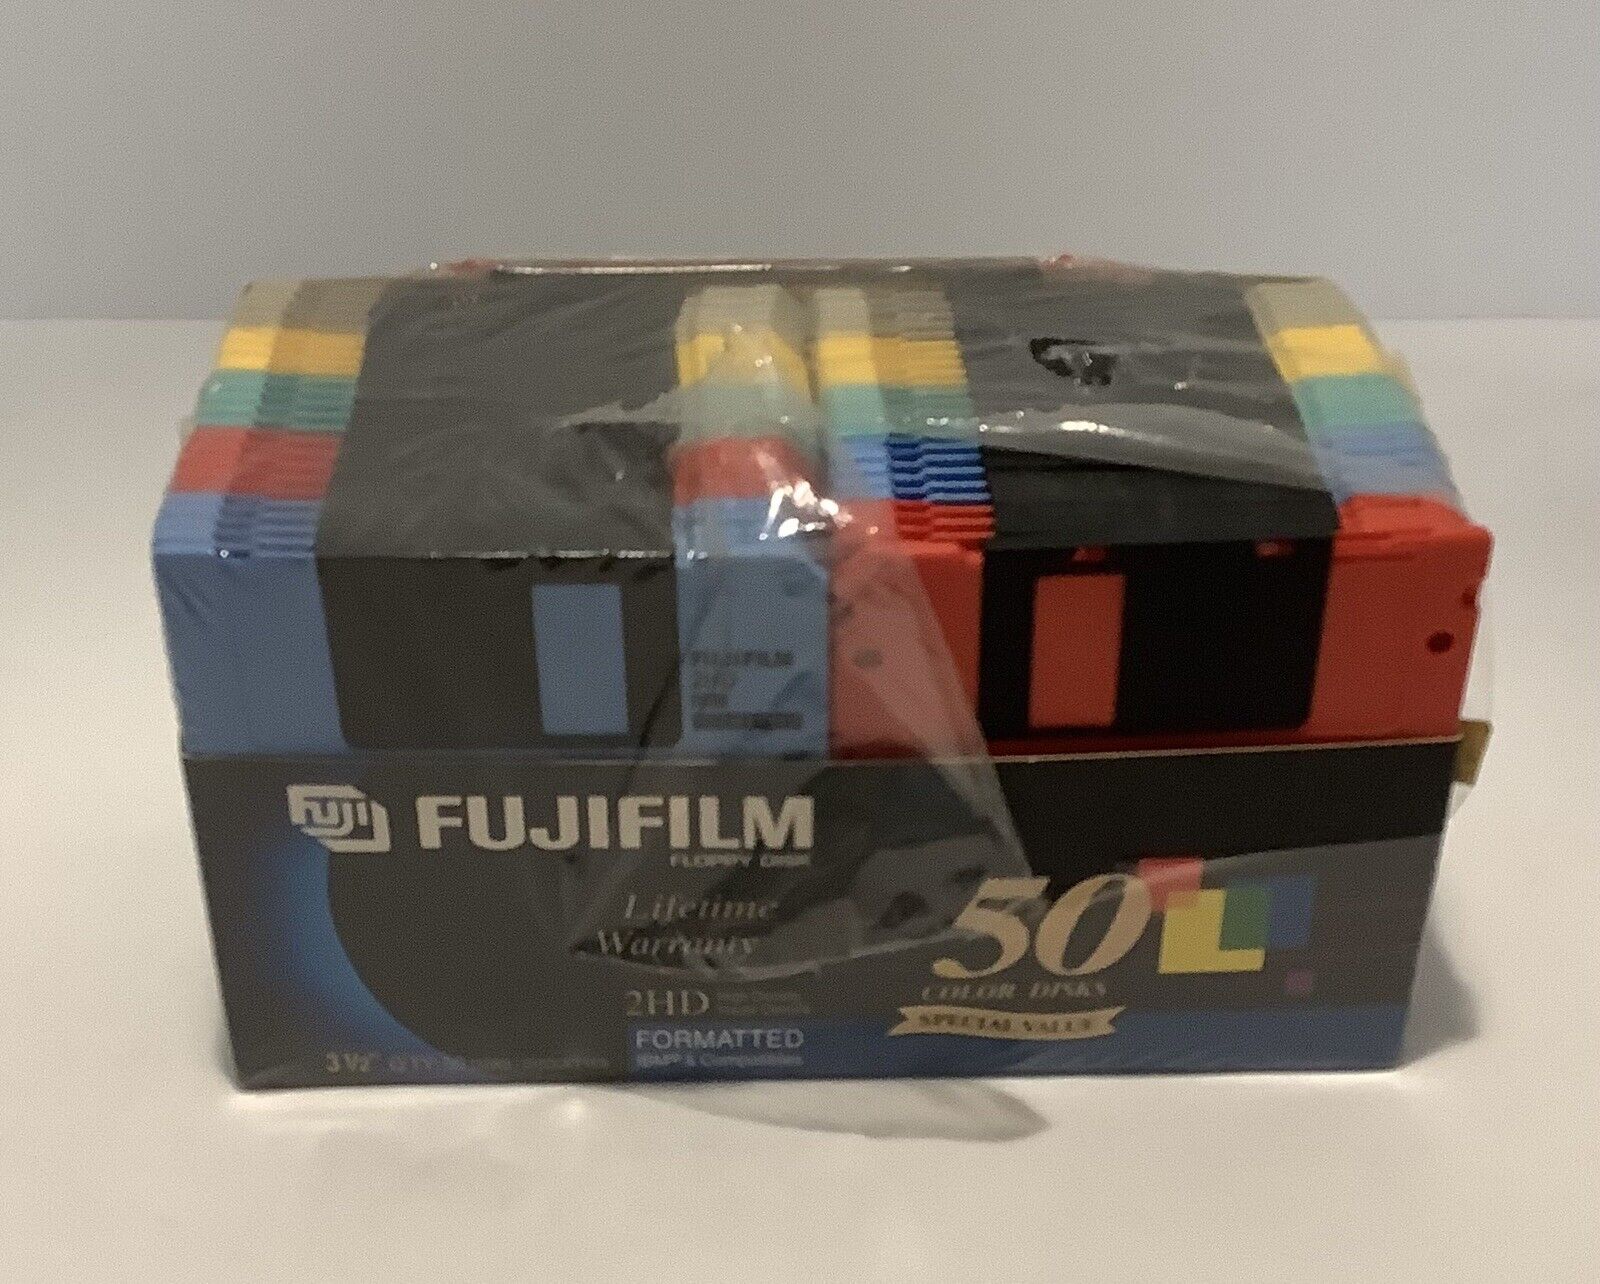 Fujifilm 3 1/2